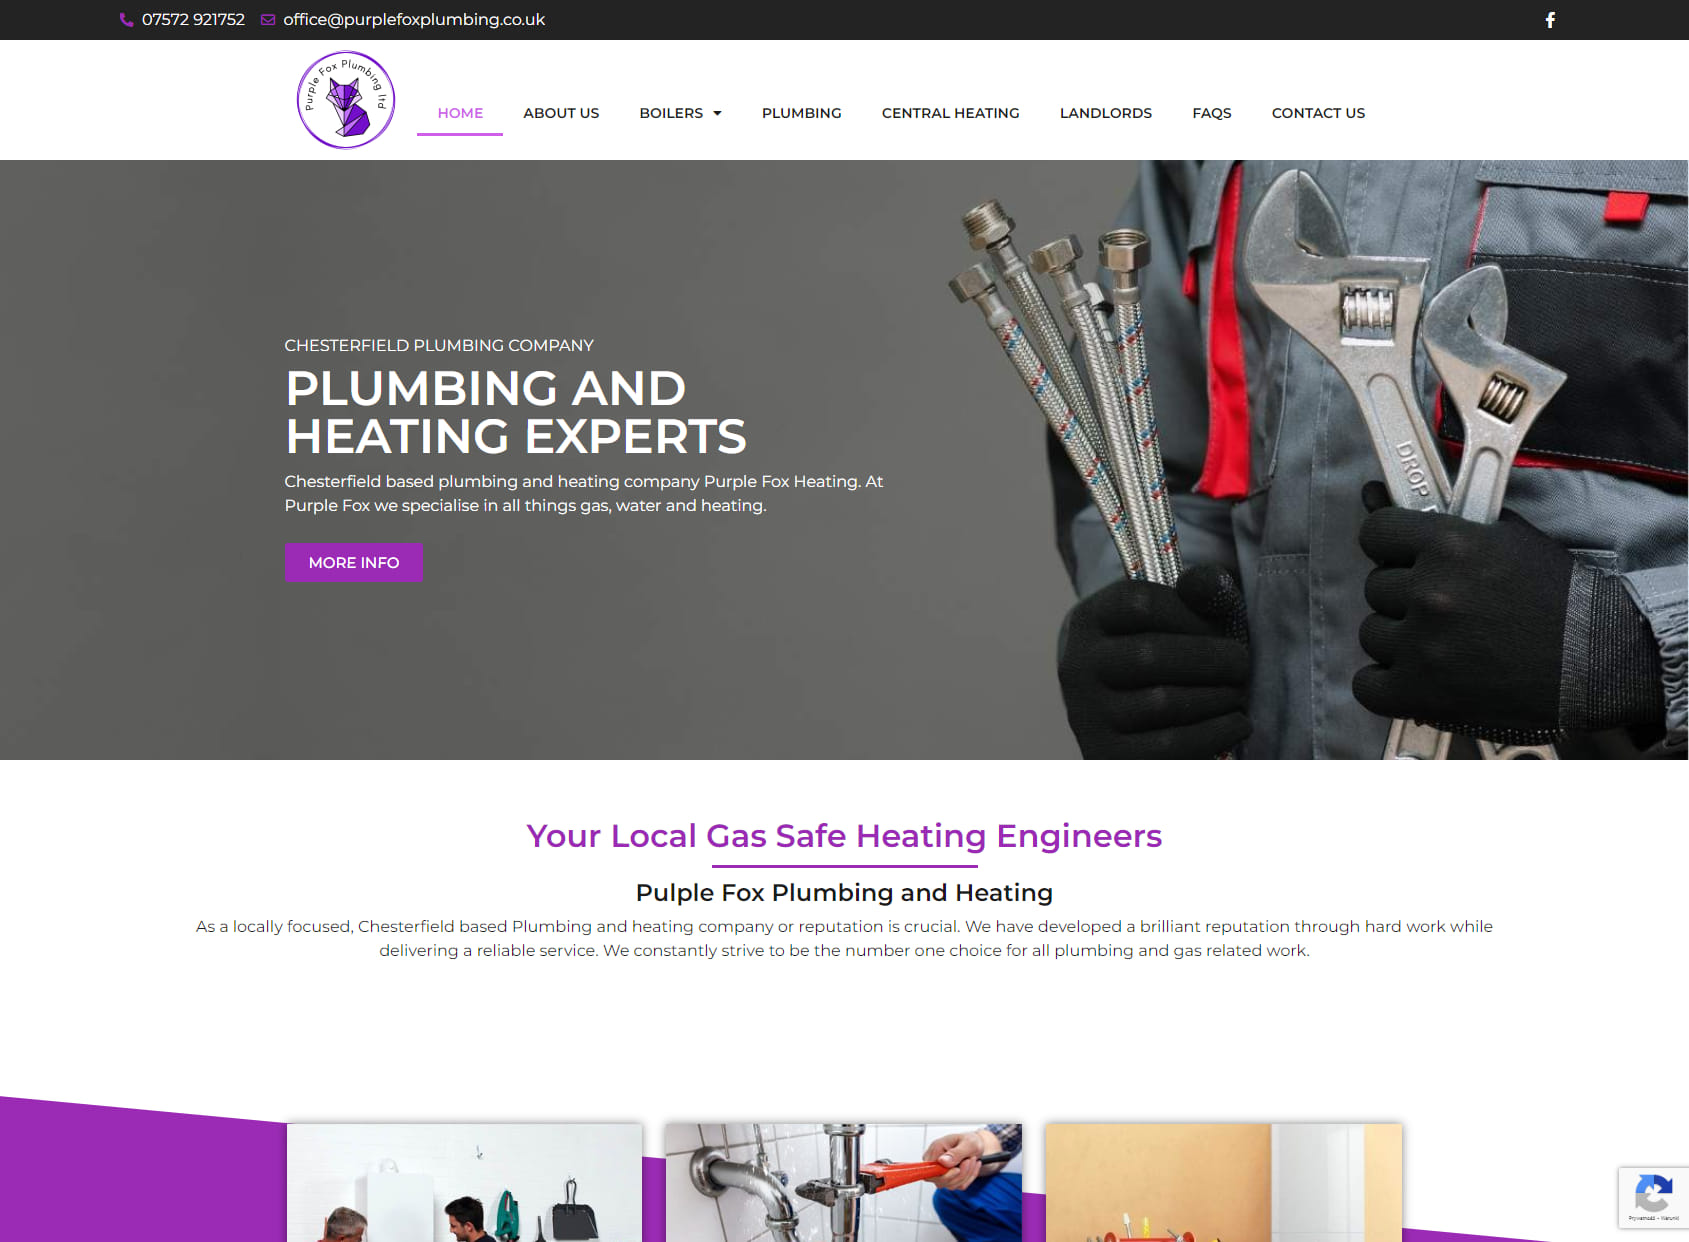 Purple Fox Plumbing Ltd